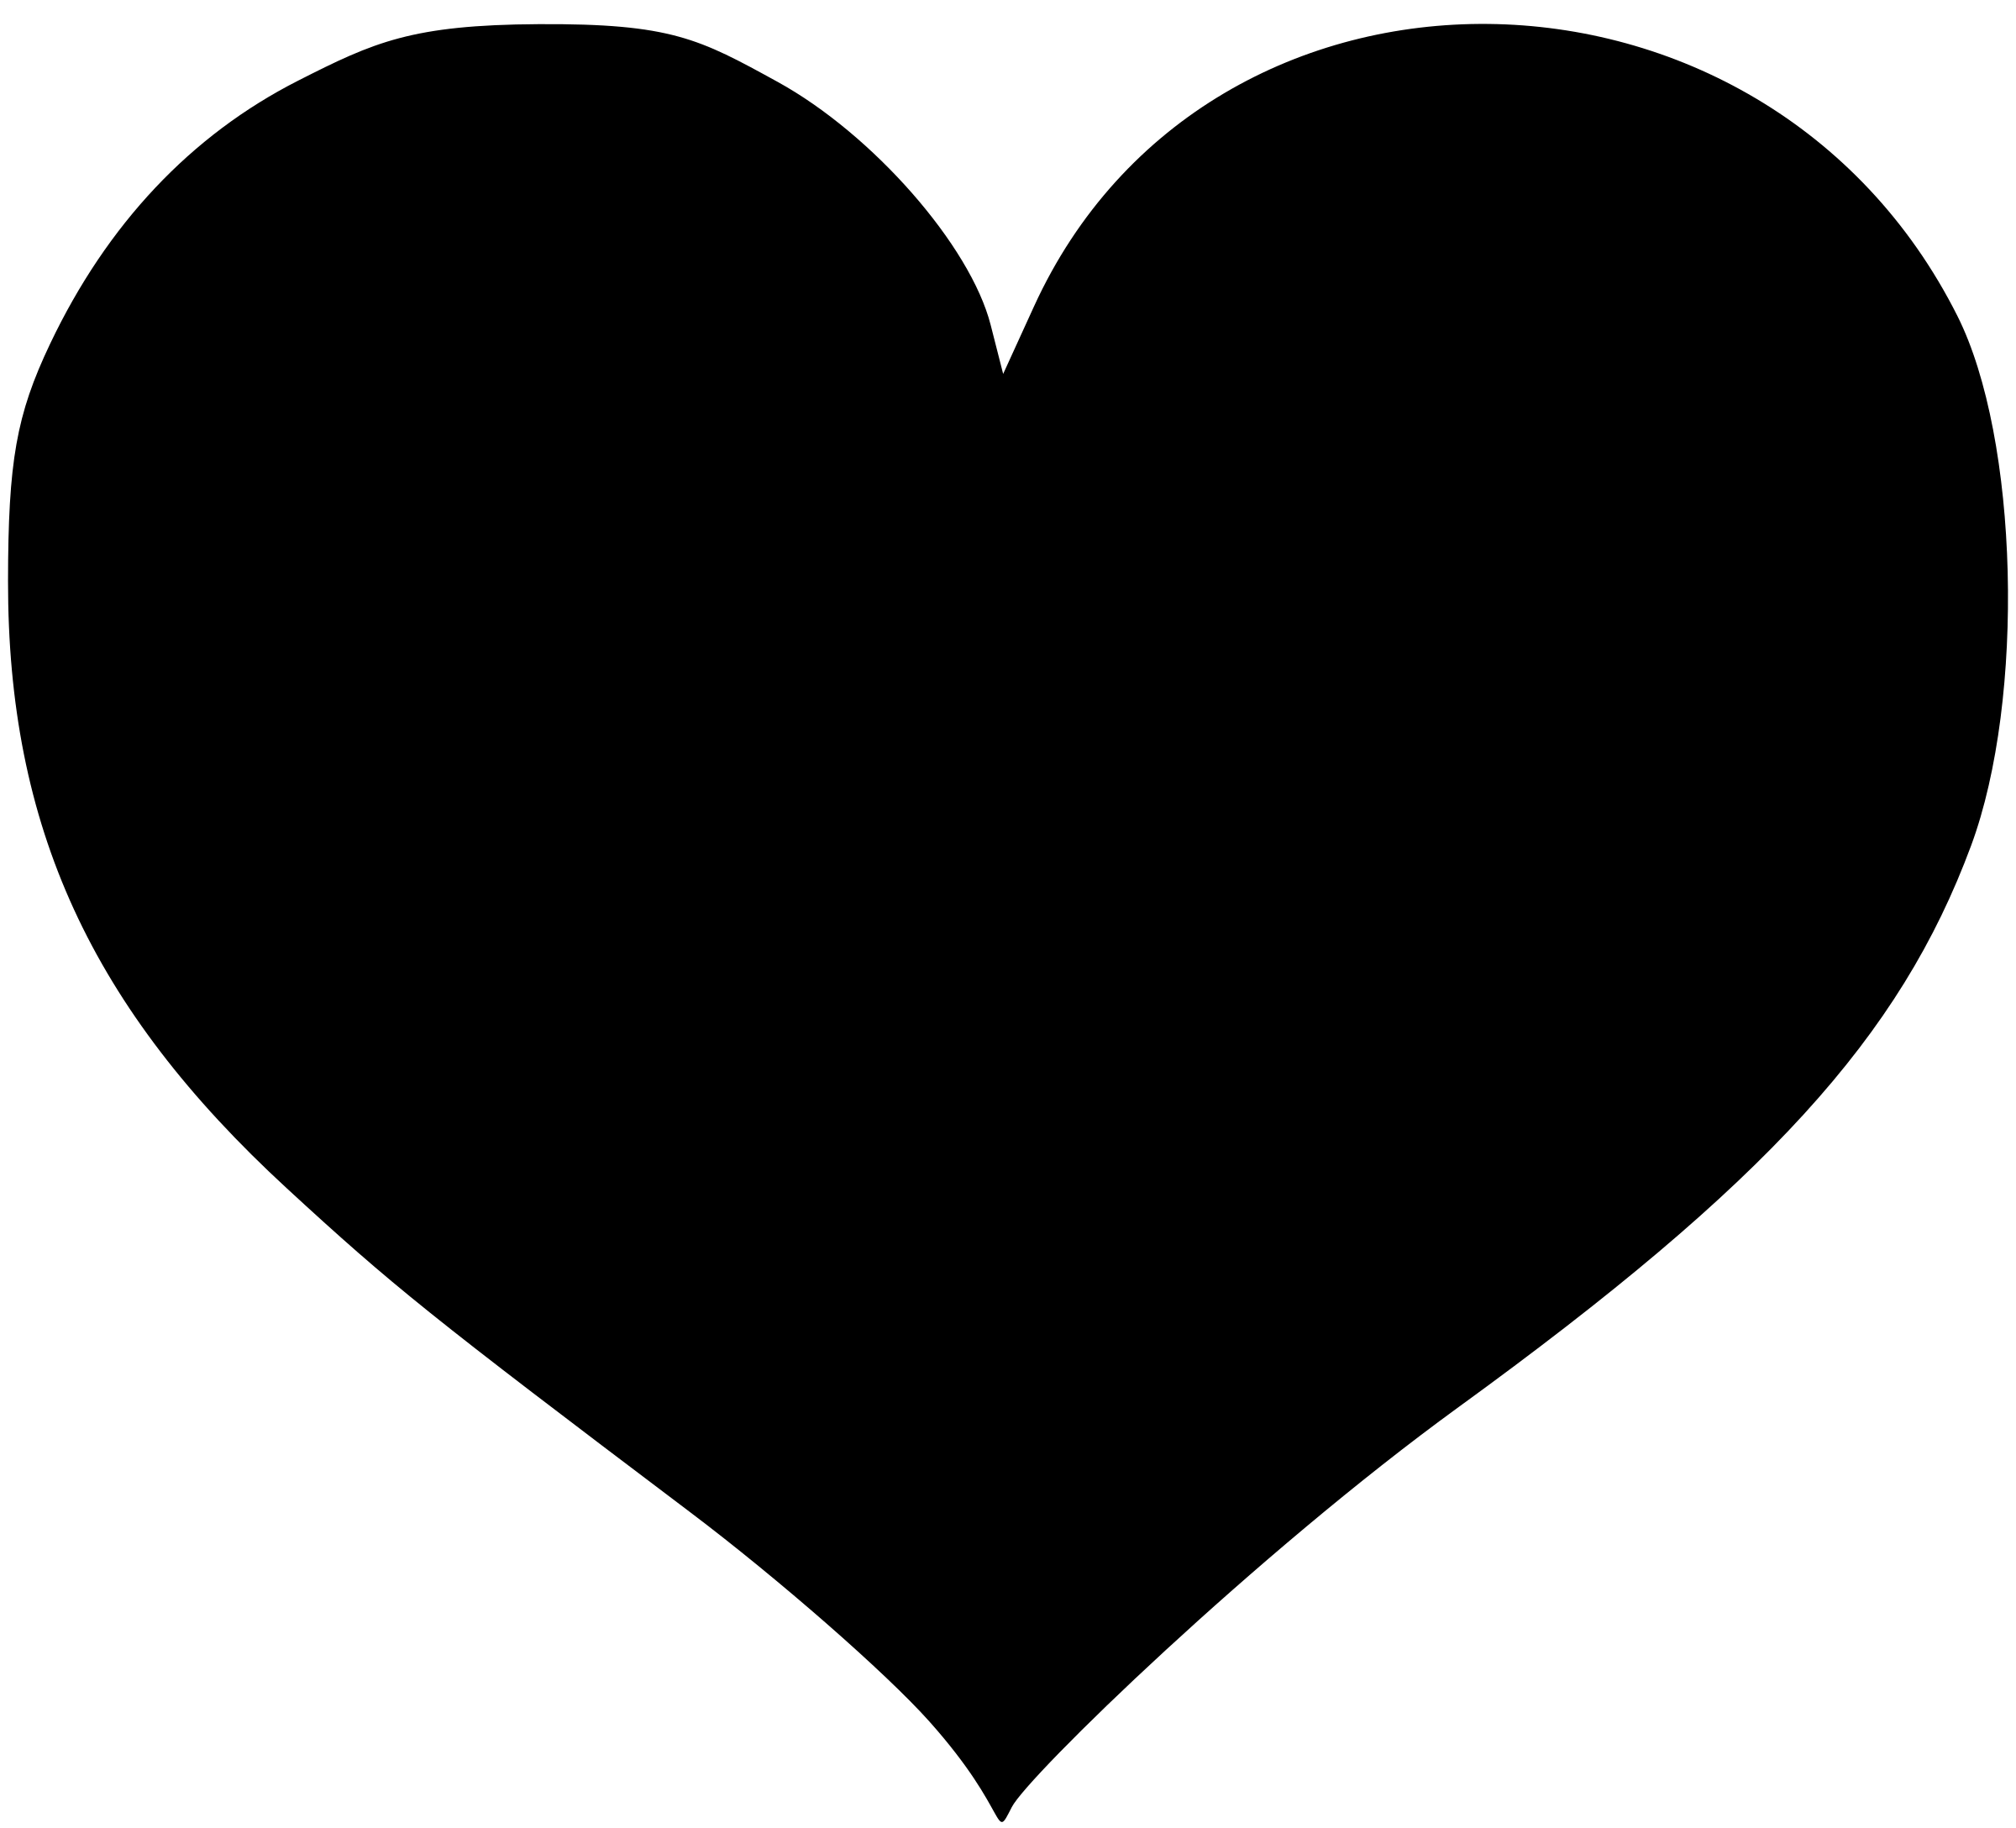 Heart Black and White Logo - Heart Logo PNG Transparent & SVG Vector